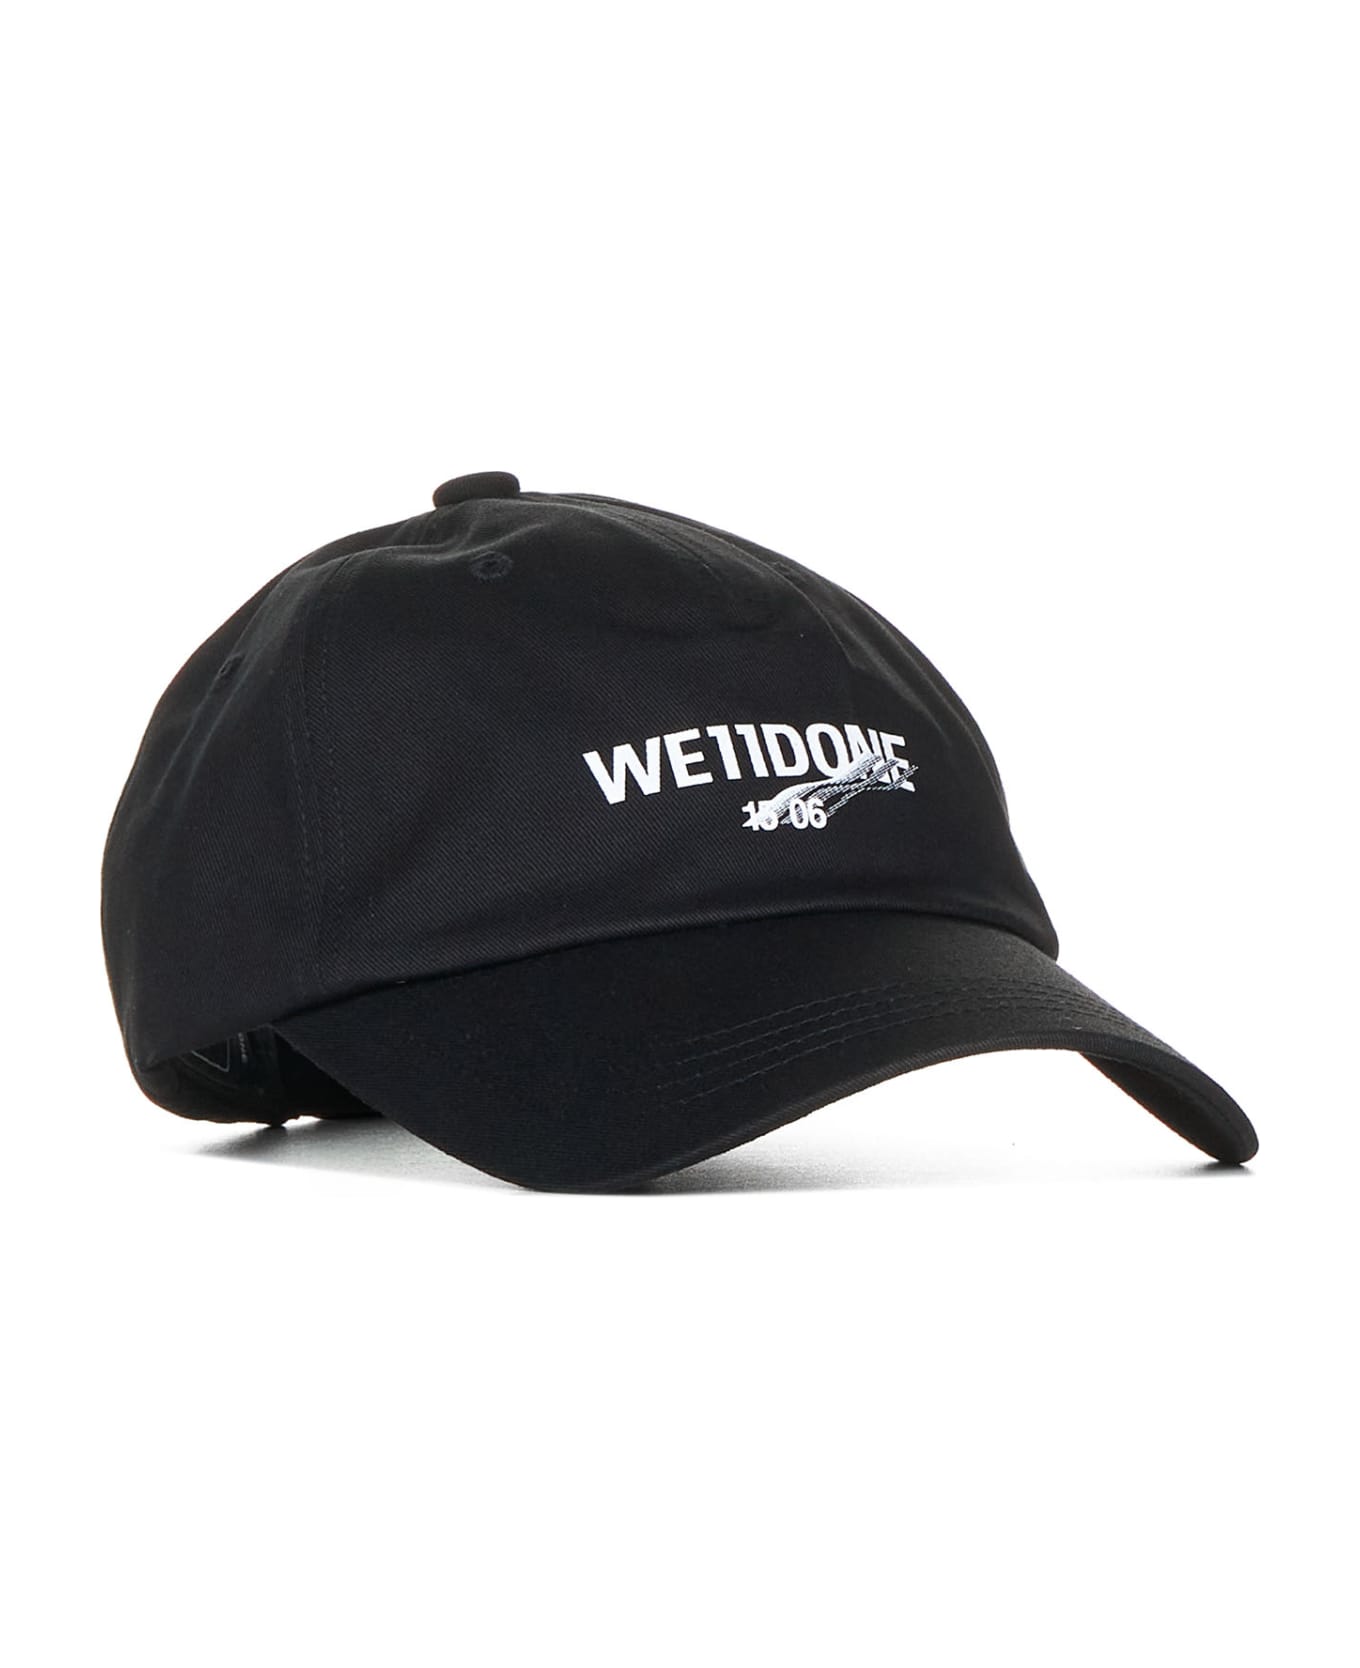 WE11 DONE Hat - Black 帽子